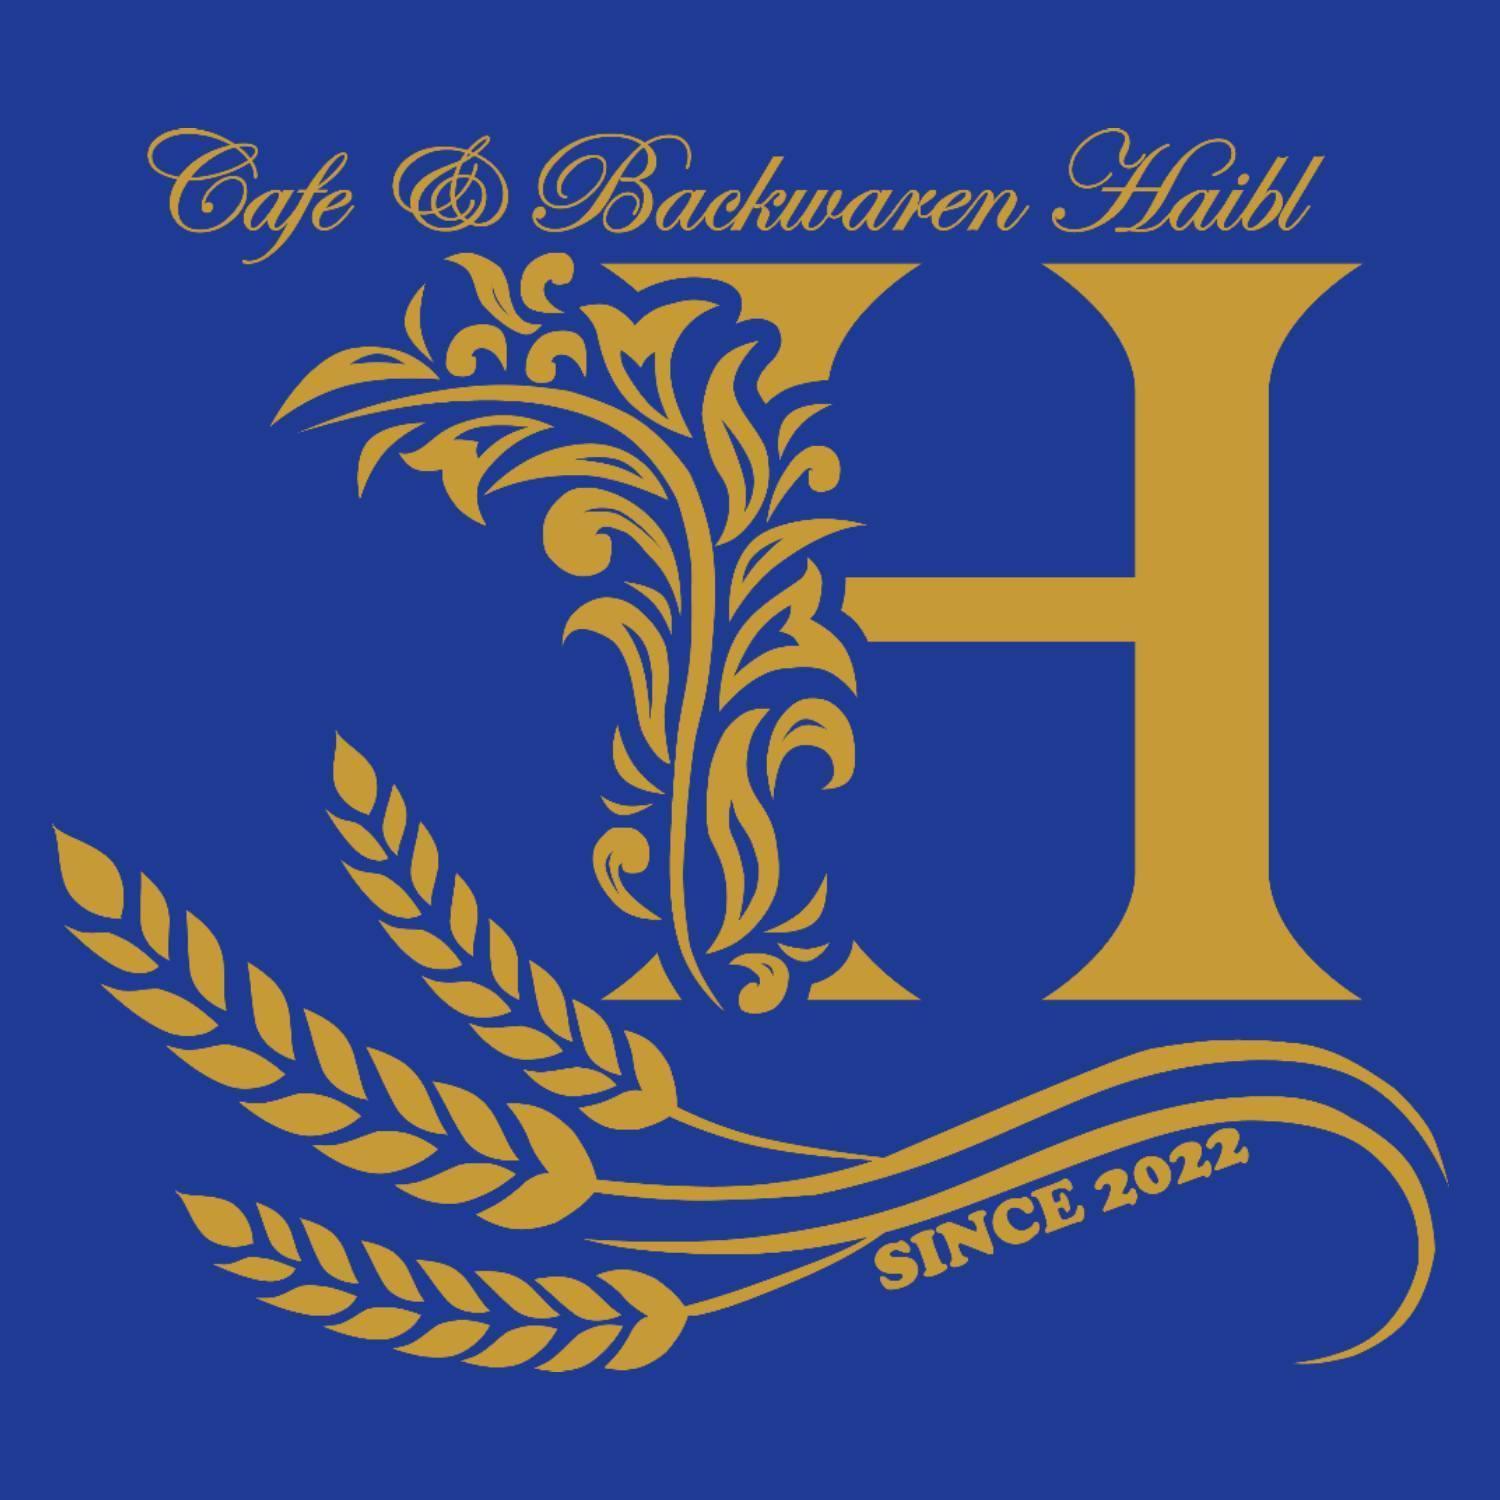 Logo Cafe & Backwaren Haibl - Karin Haibl